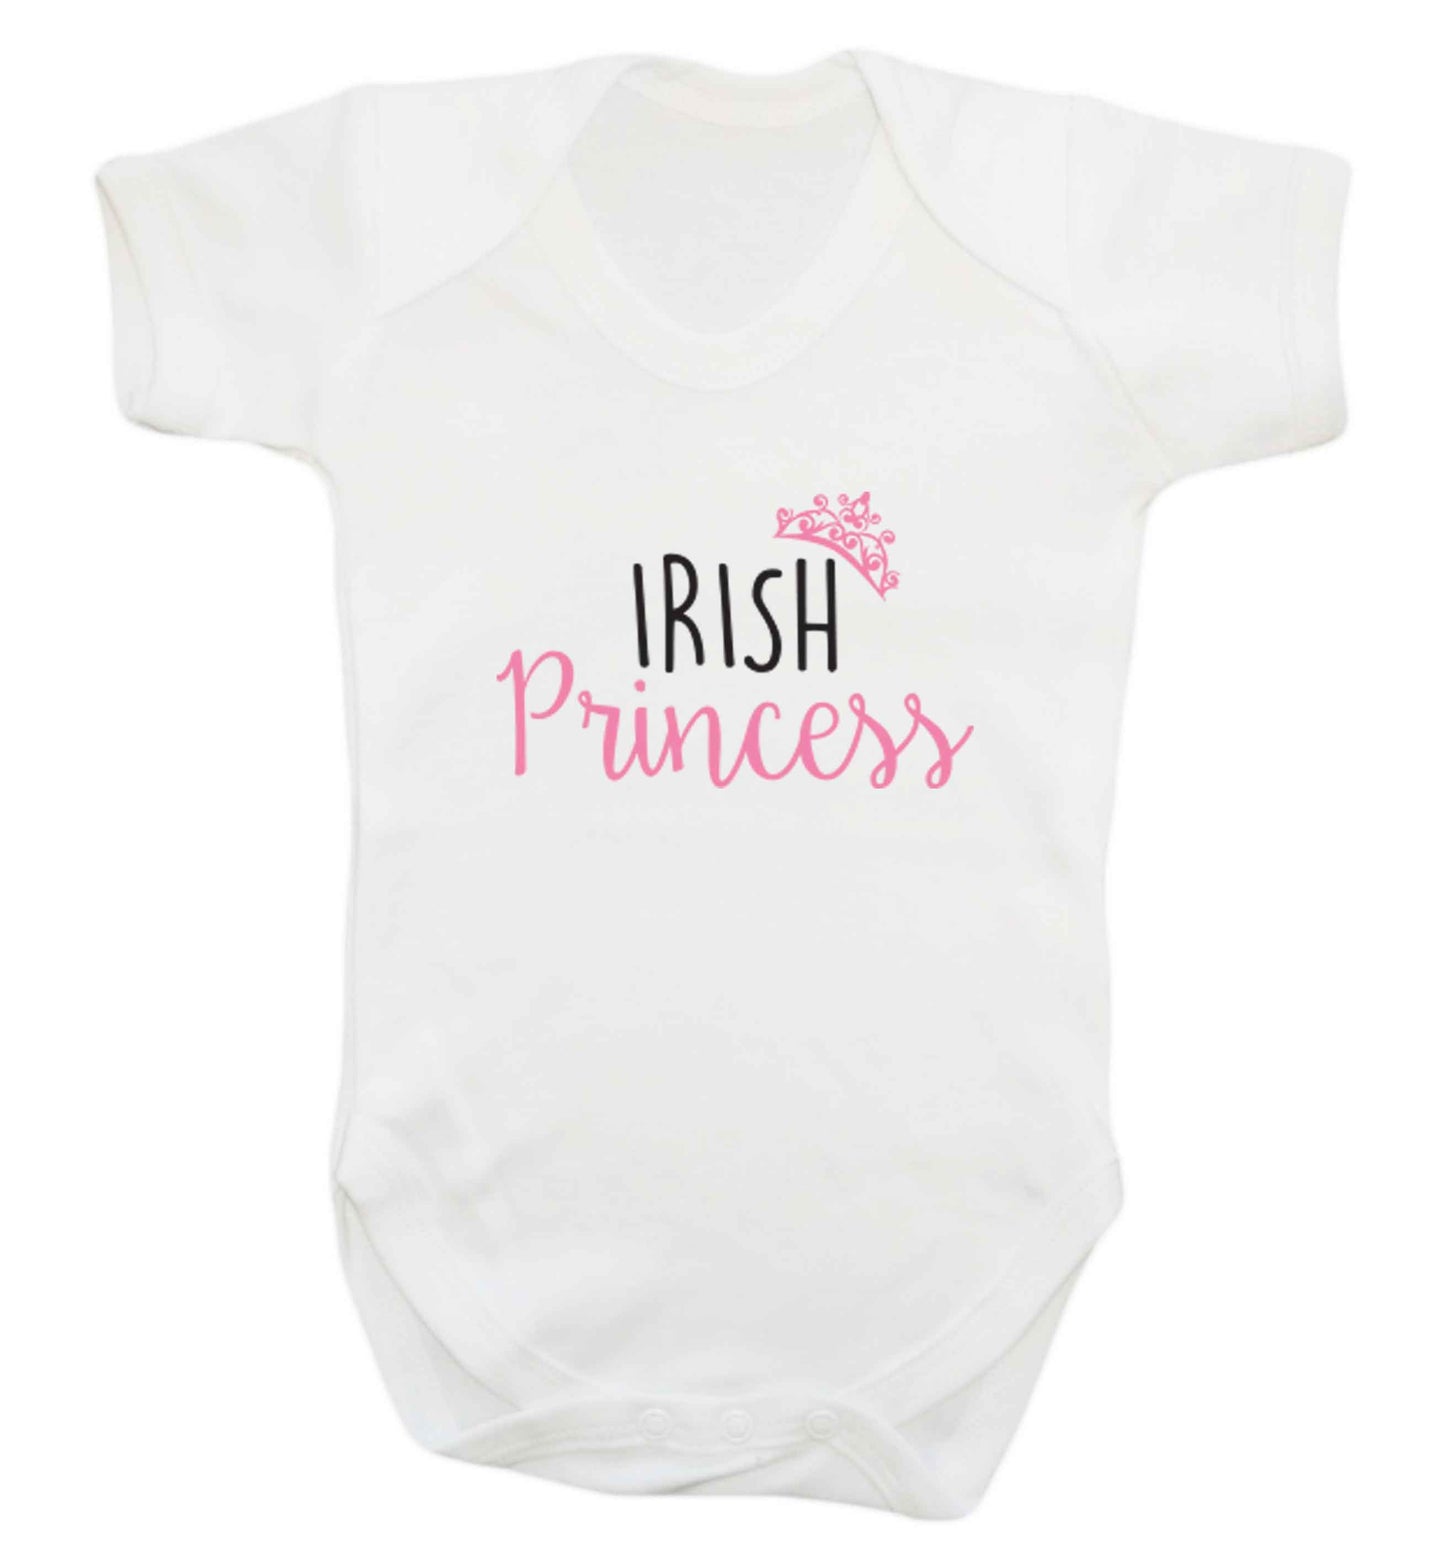 Irish princess baby vest white 18-24 months